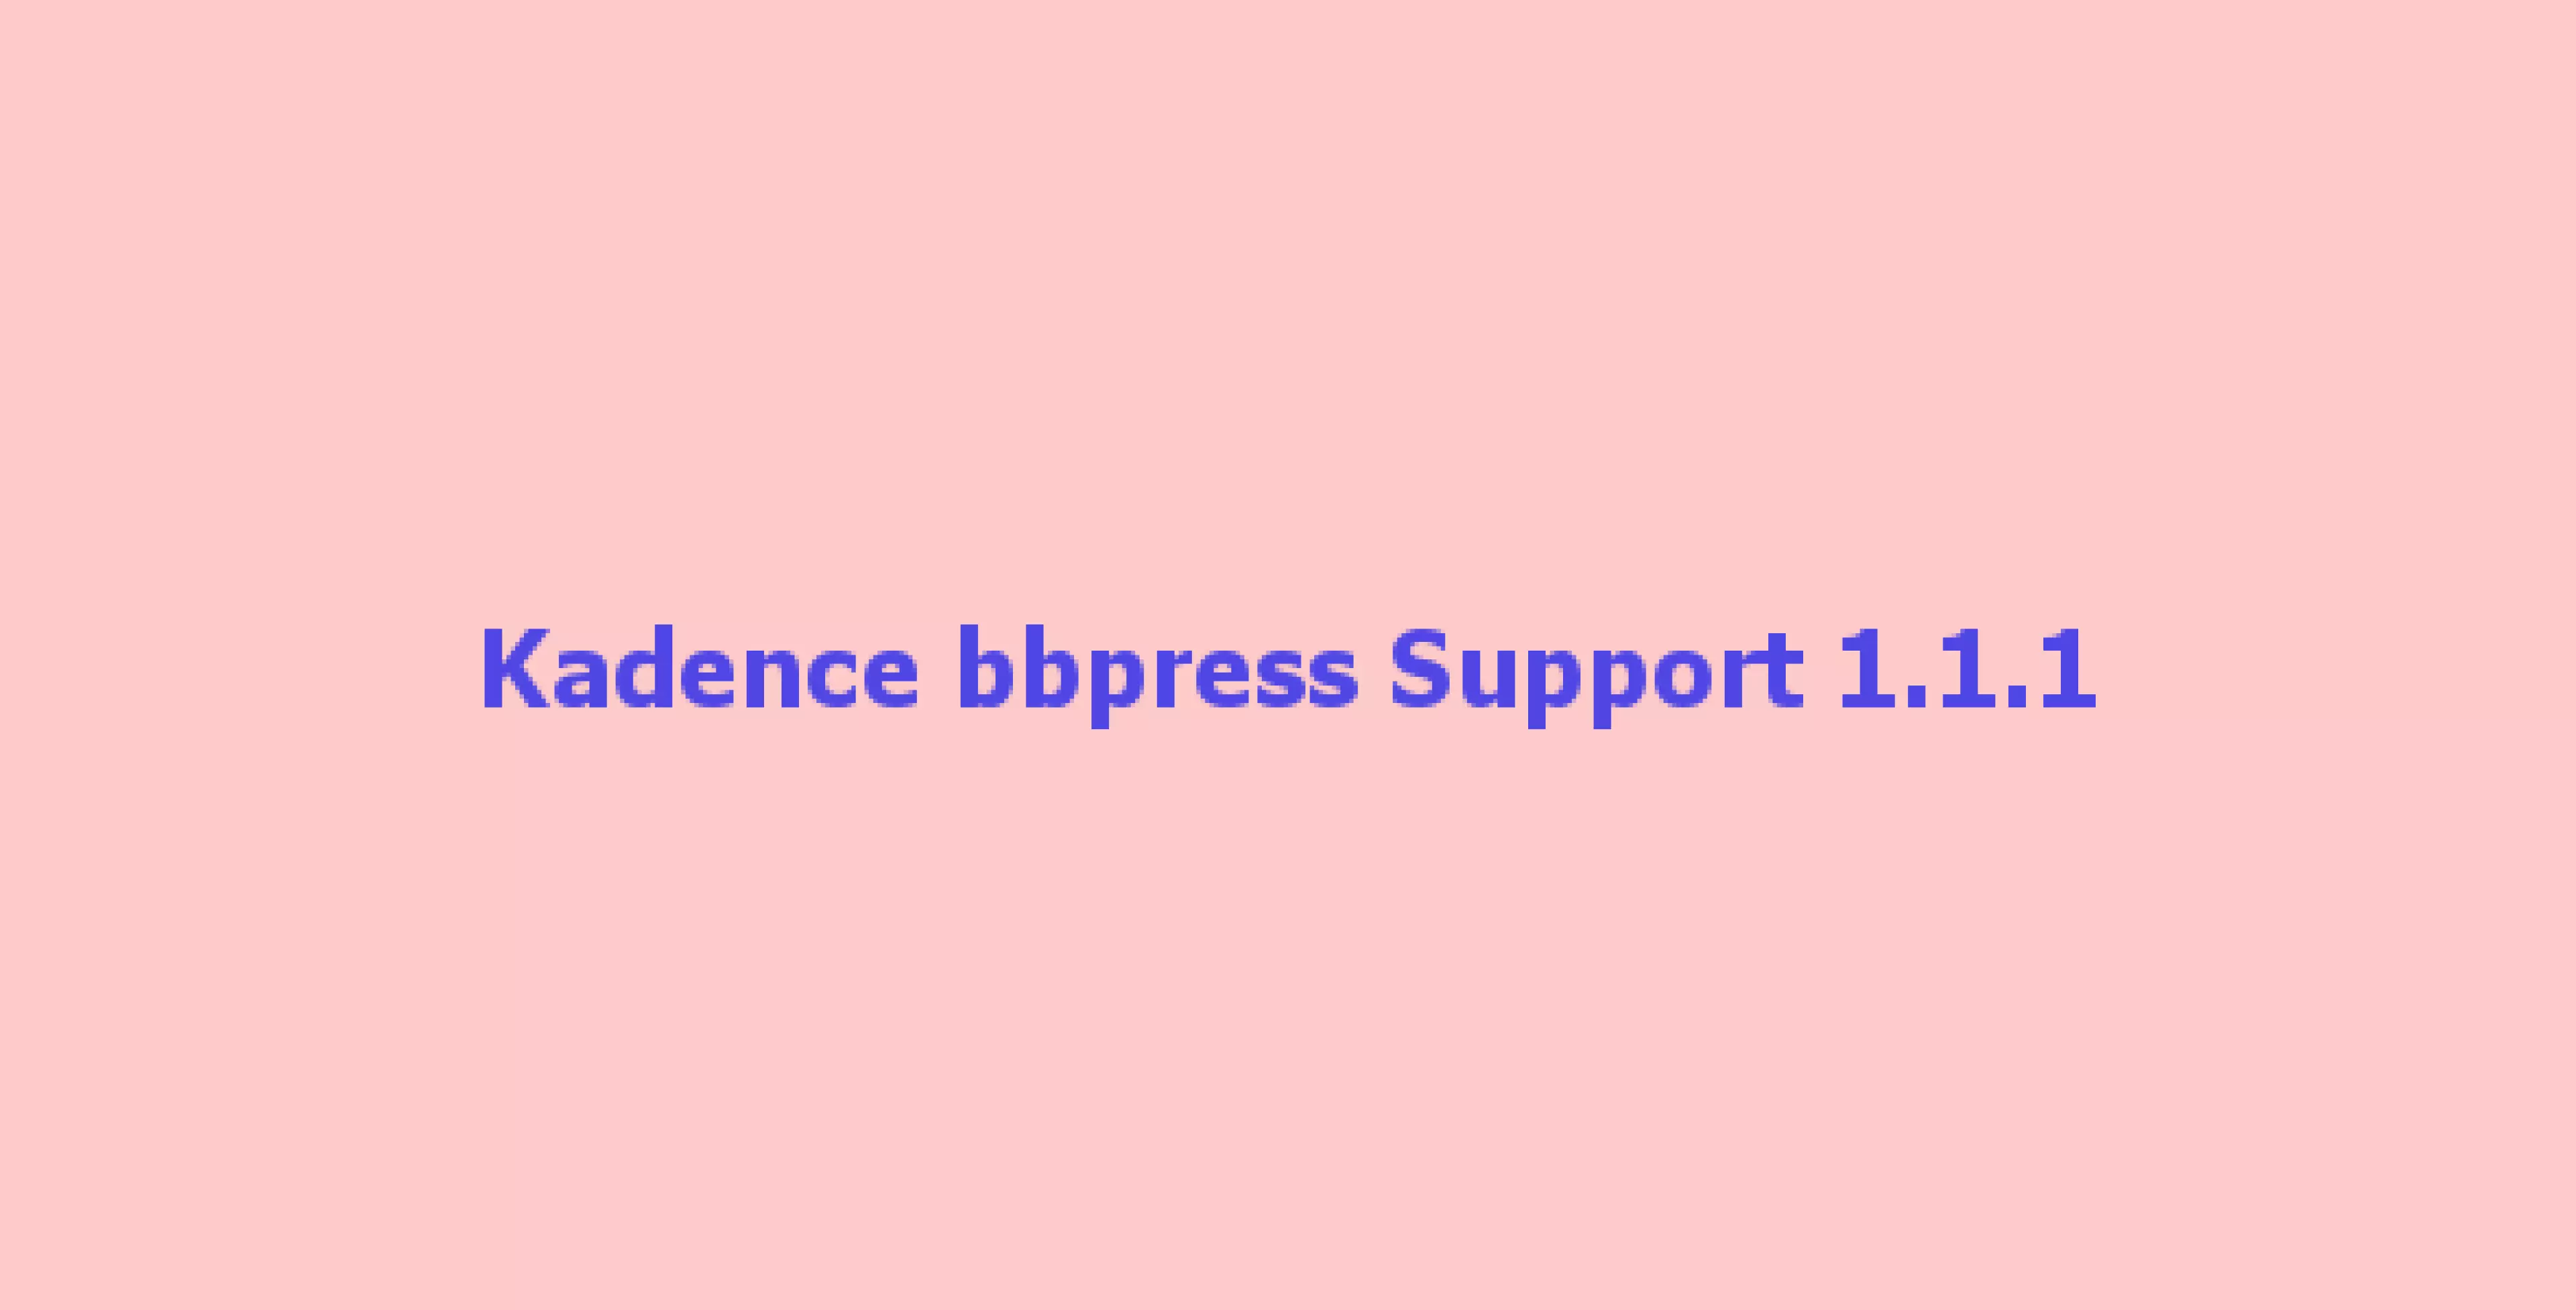 Kadence bbpress Support